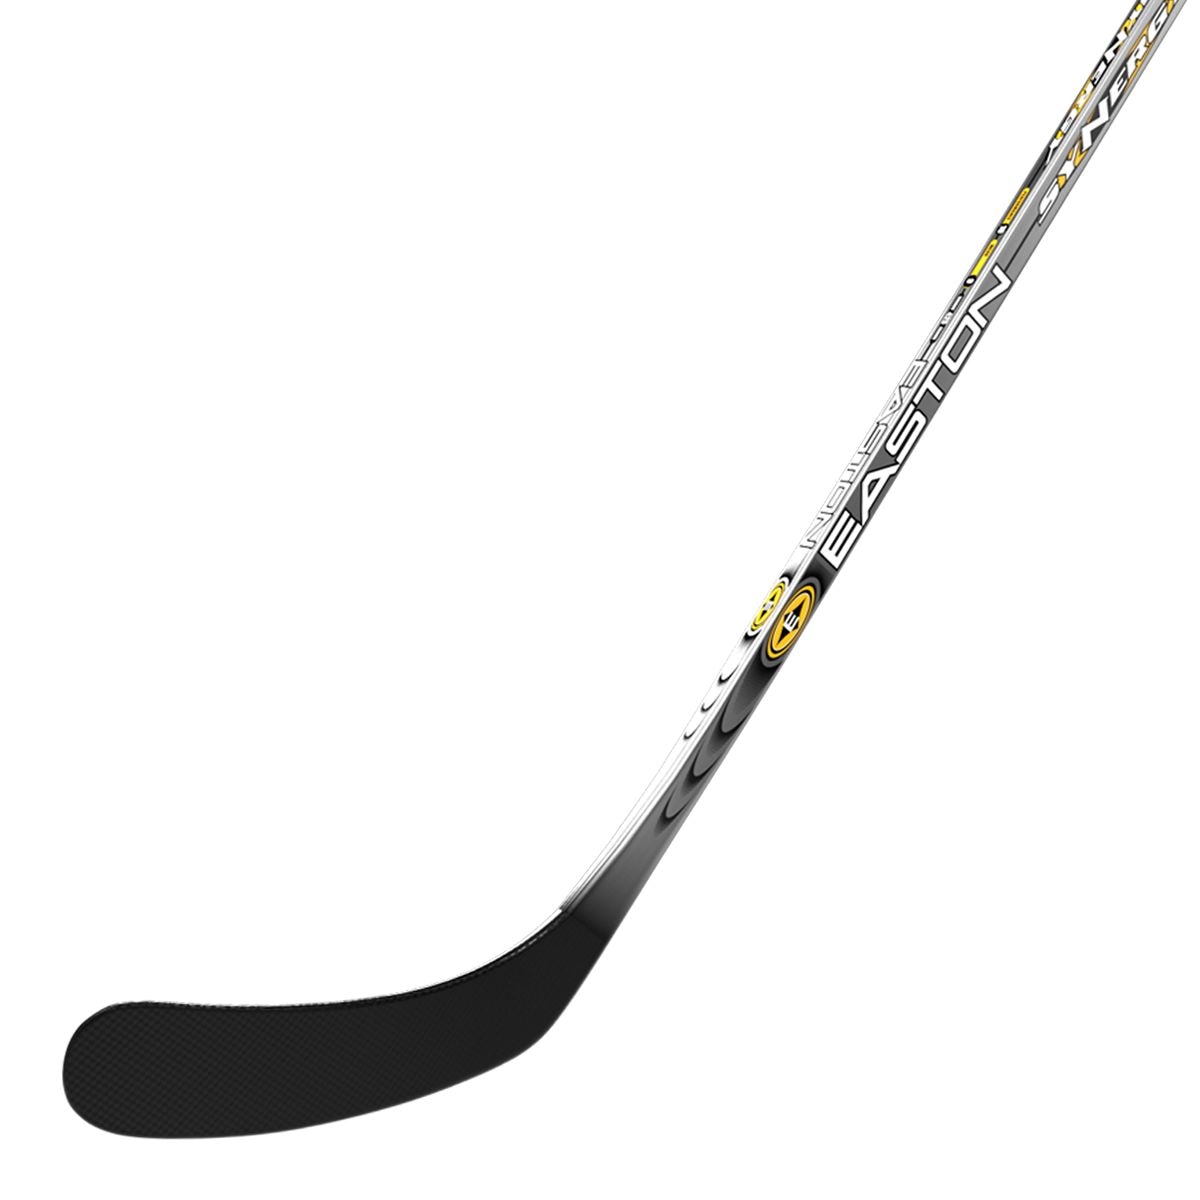 Easton Synergy Senior Hockey Stick 60